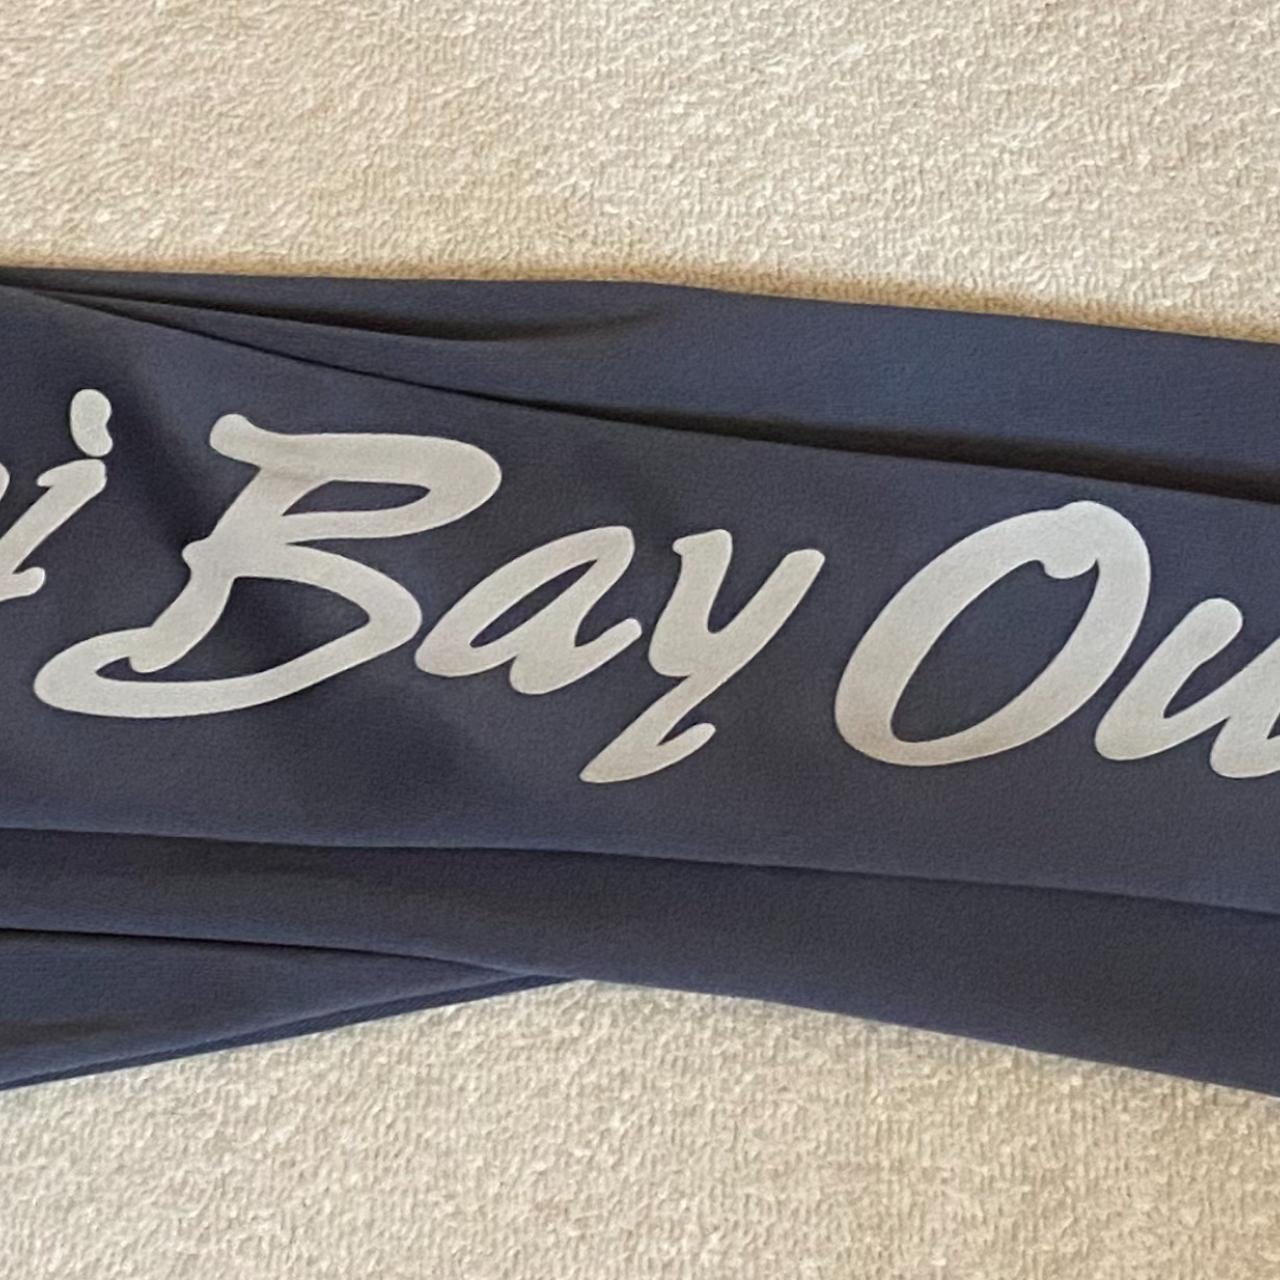 Bimini Bay Outfitters Mens Size XL Long Sleeve - Depop